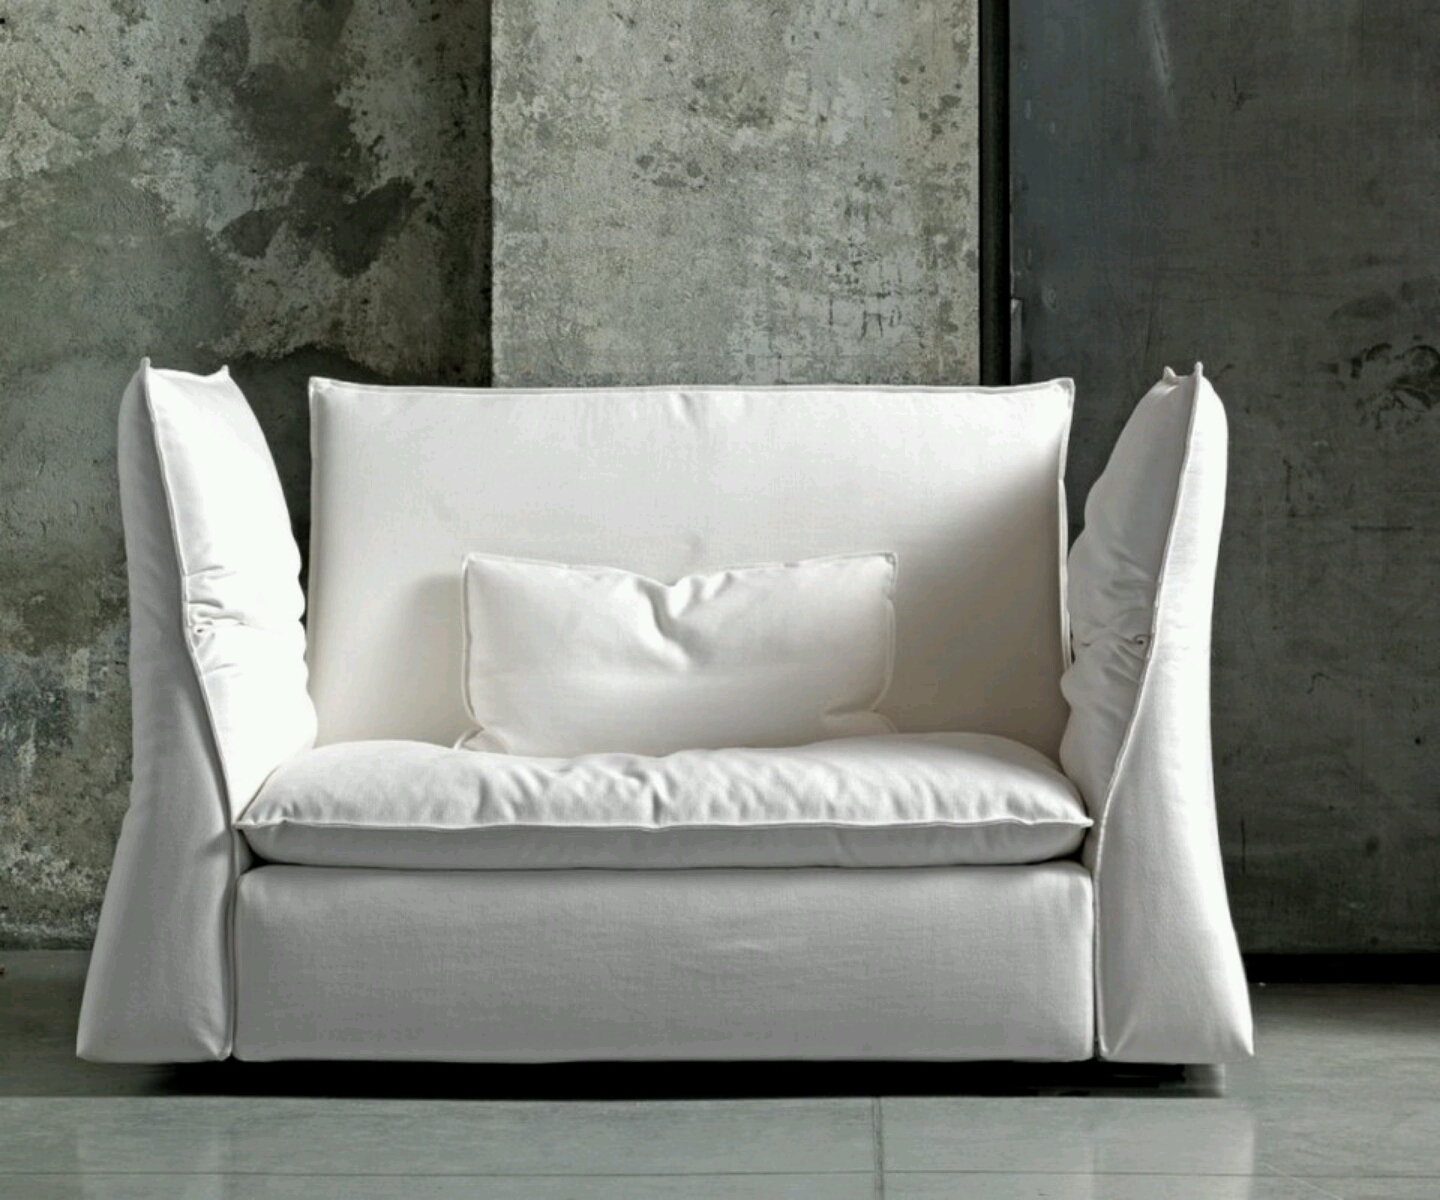  modern sofa designs models. ~ Coretan Properti & Dunia Wirausaha